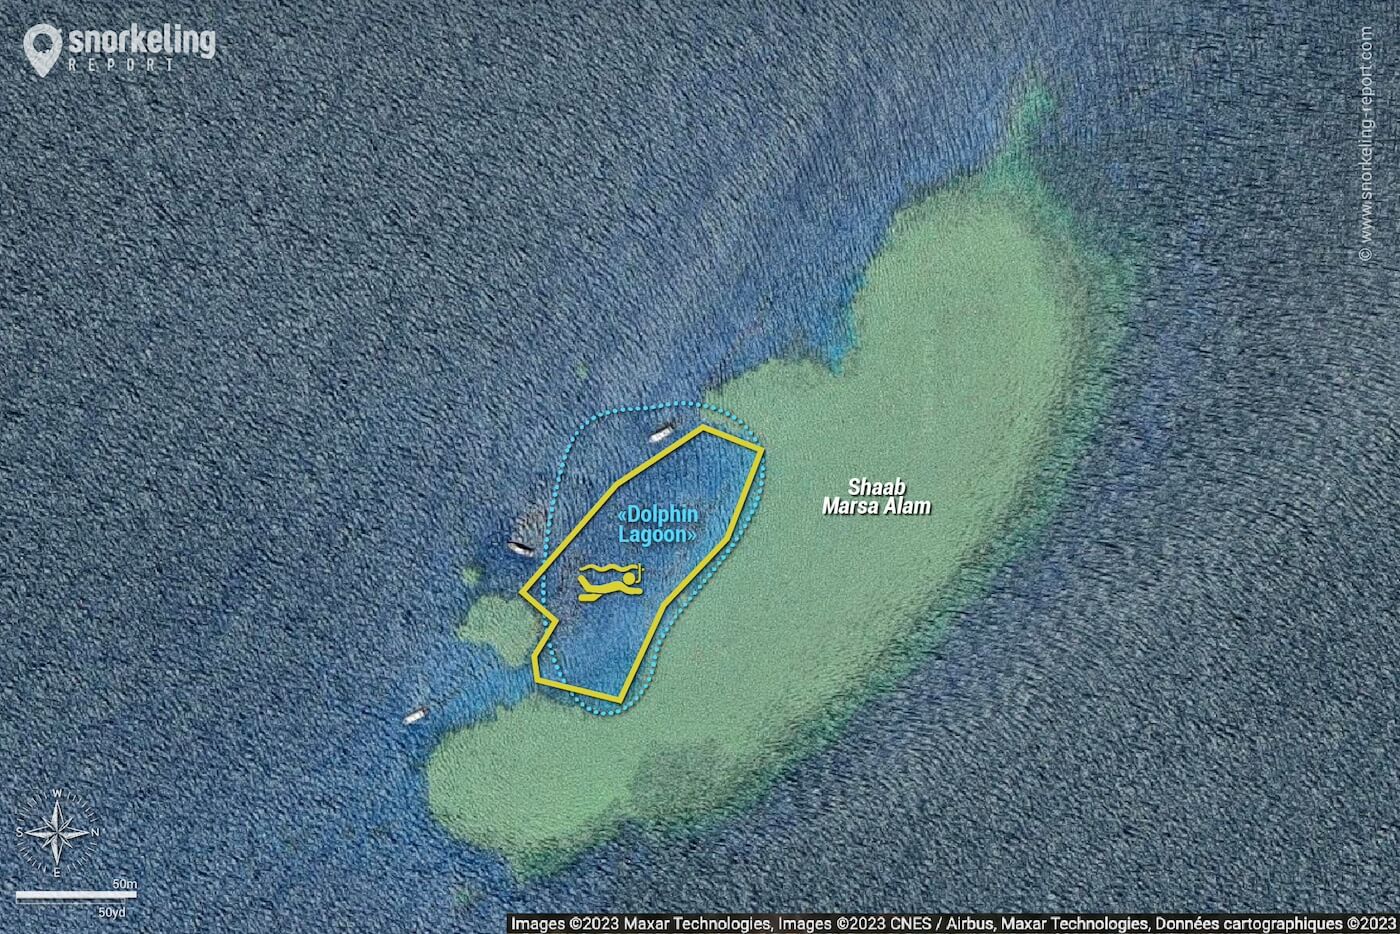 Shaab Marsa Alam snorkeling map